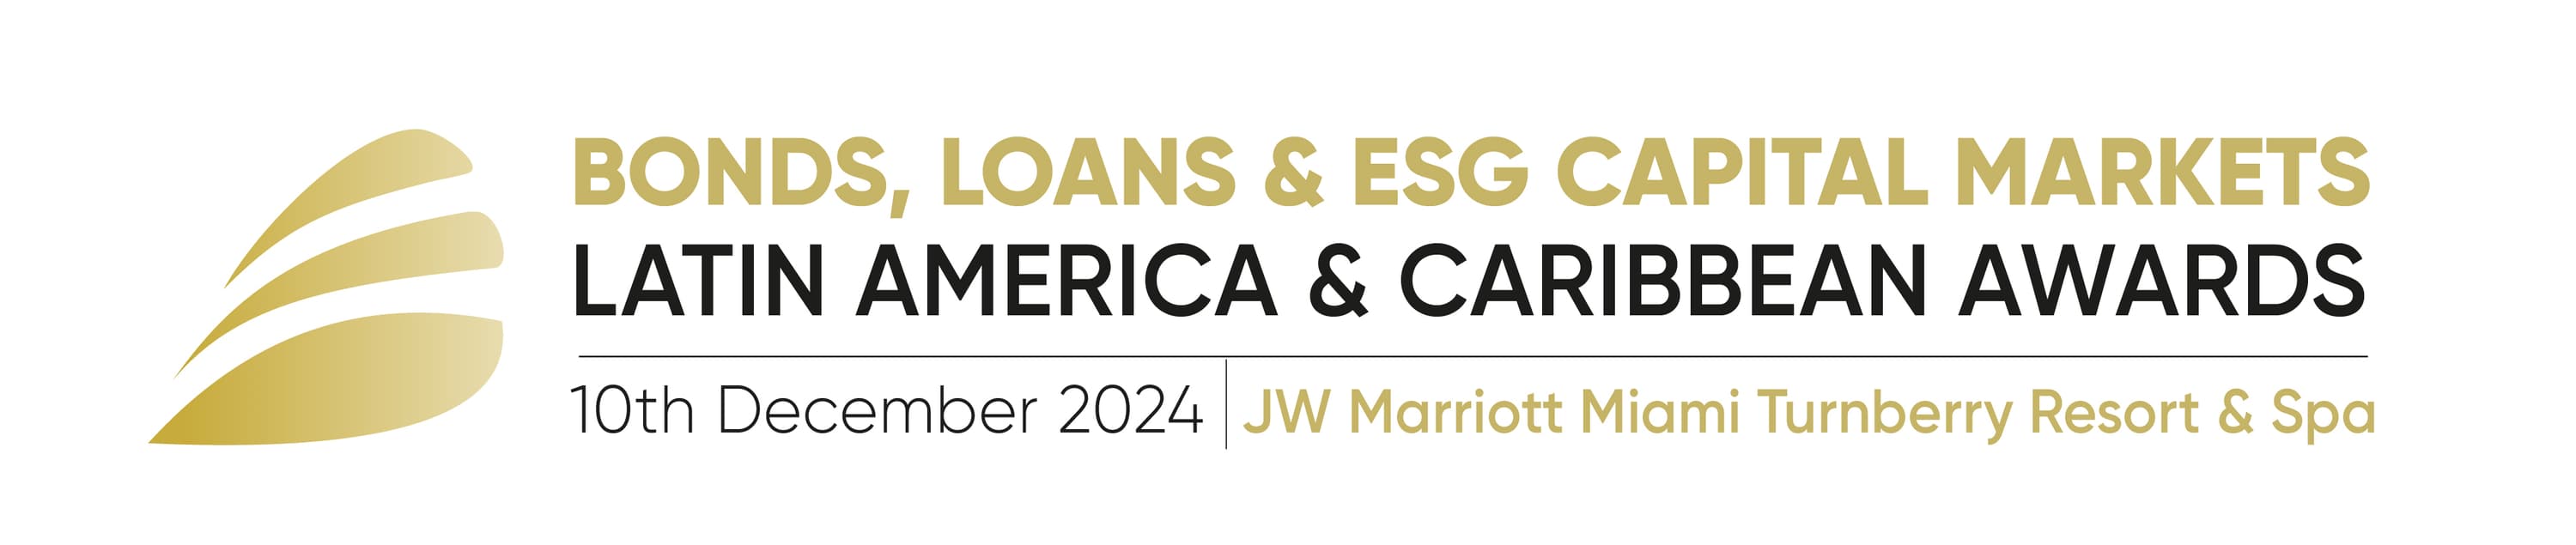 Bond, Loans & ESG Capital Markets Latin America & Caribbean AWARDS 2024